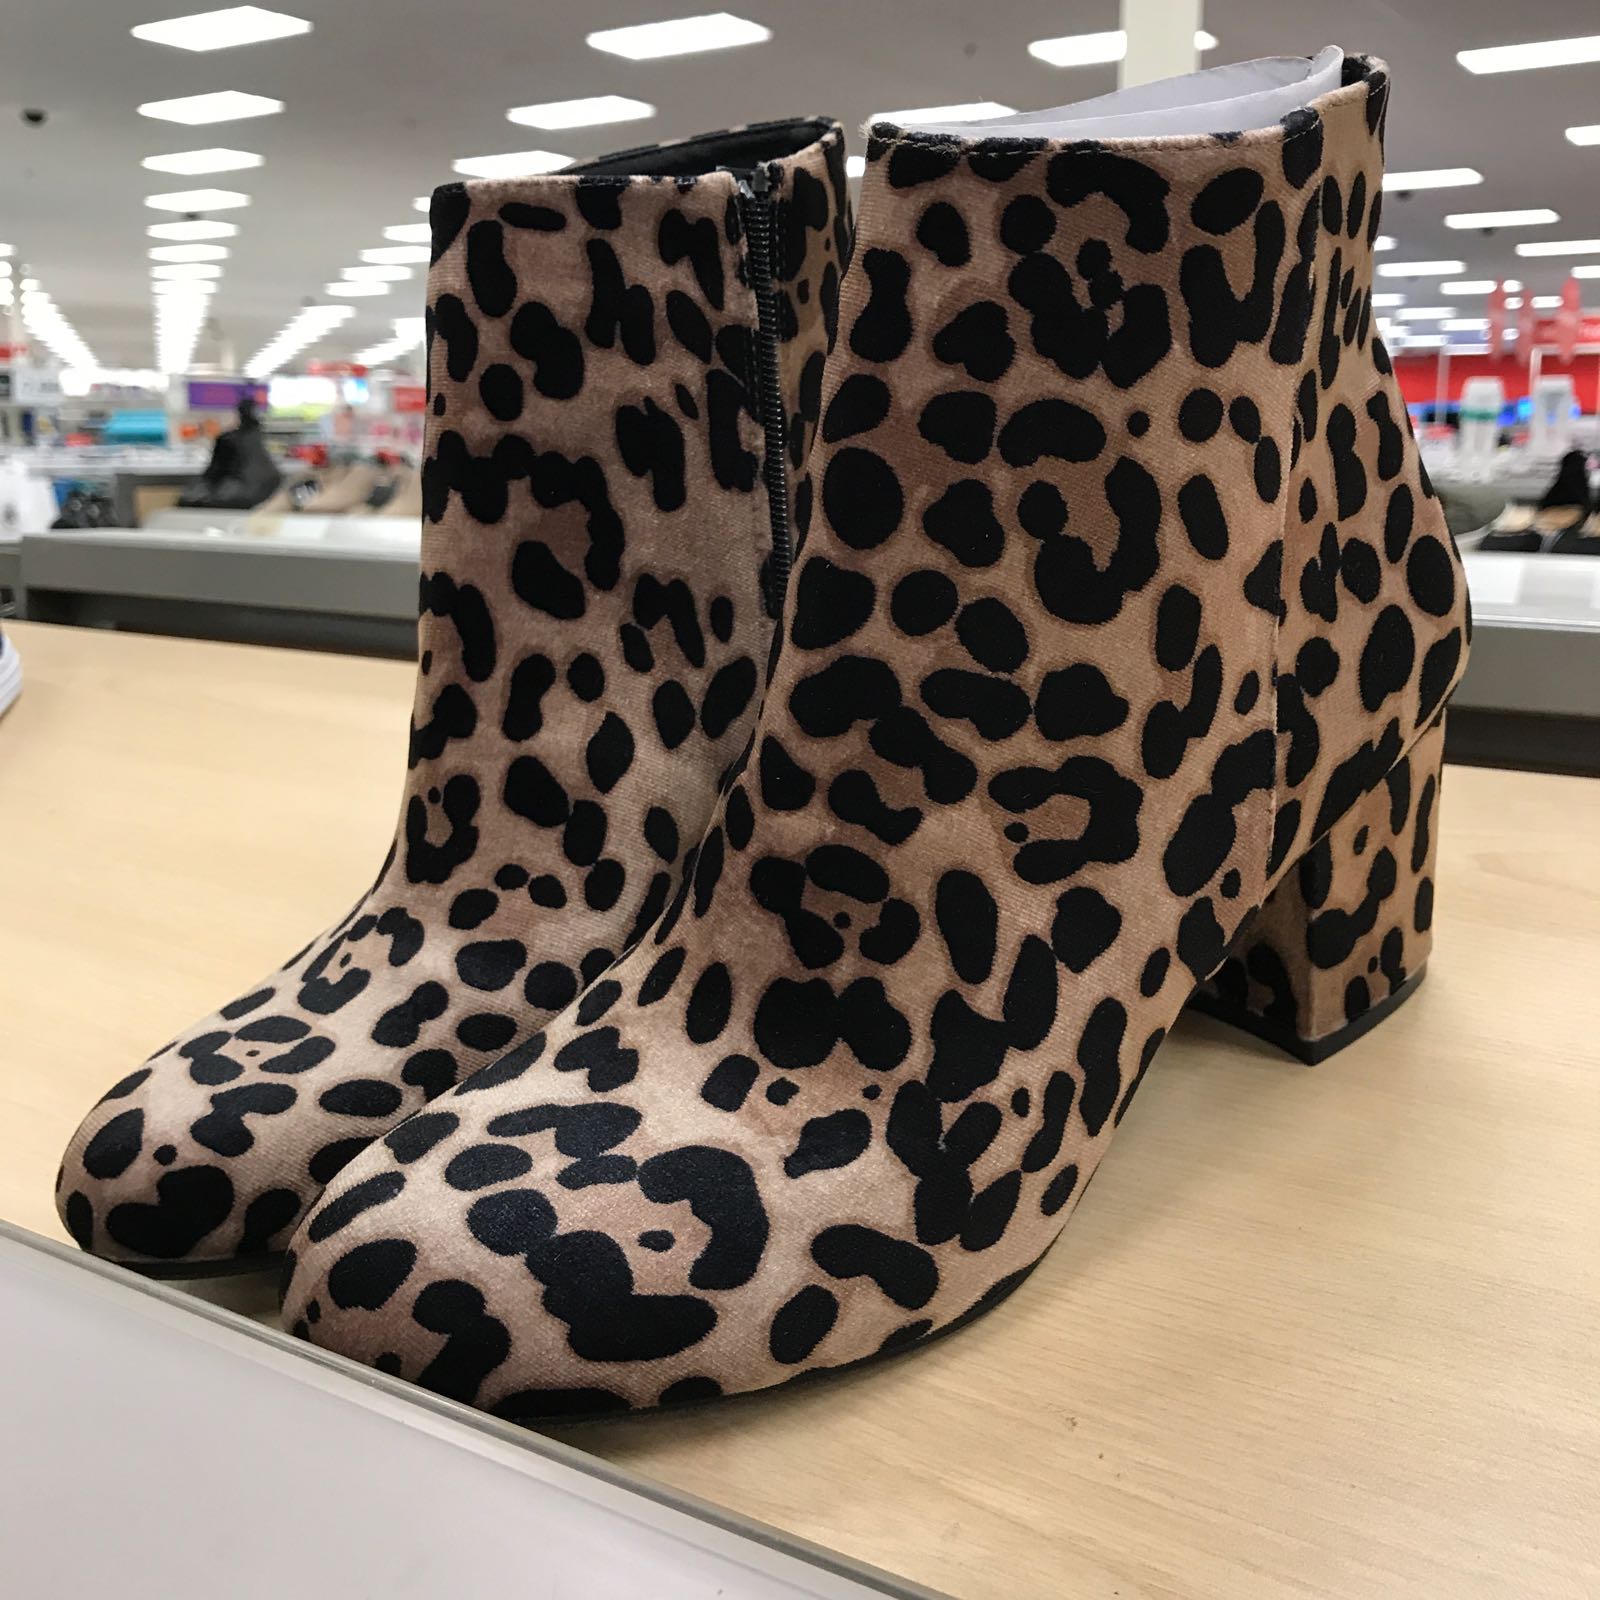 Leopard booties under $40 at Target.